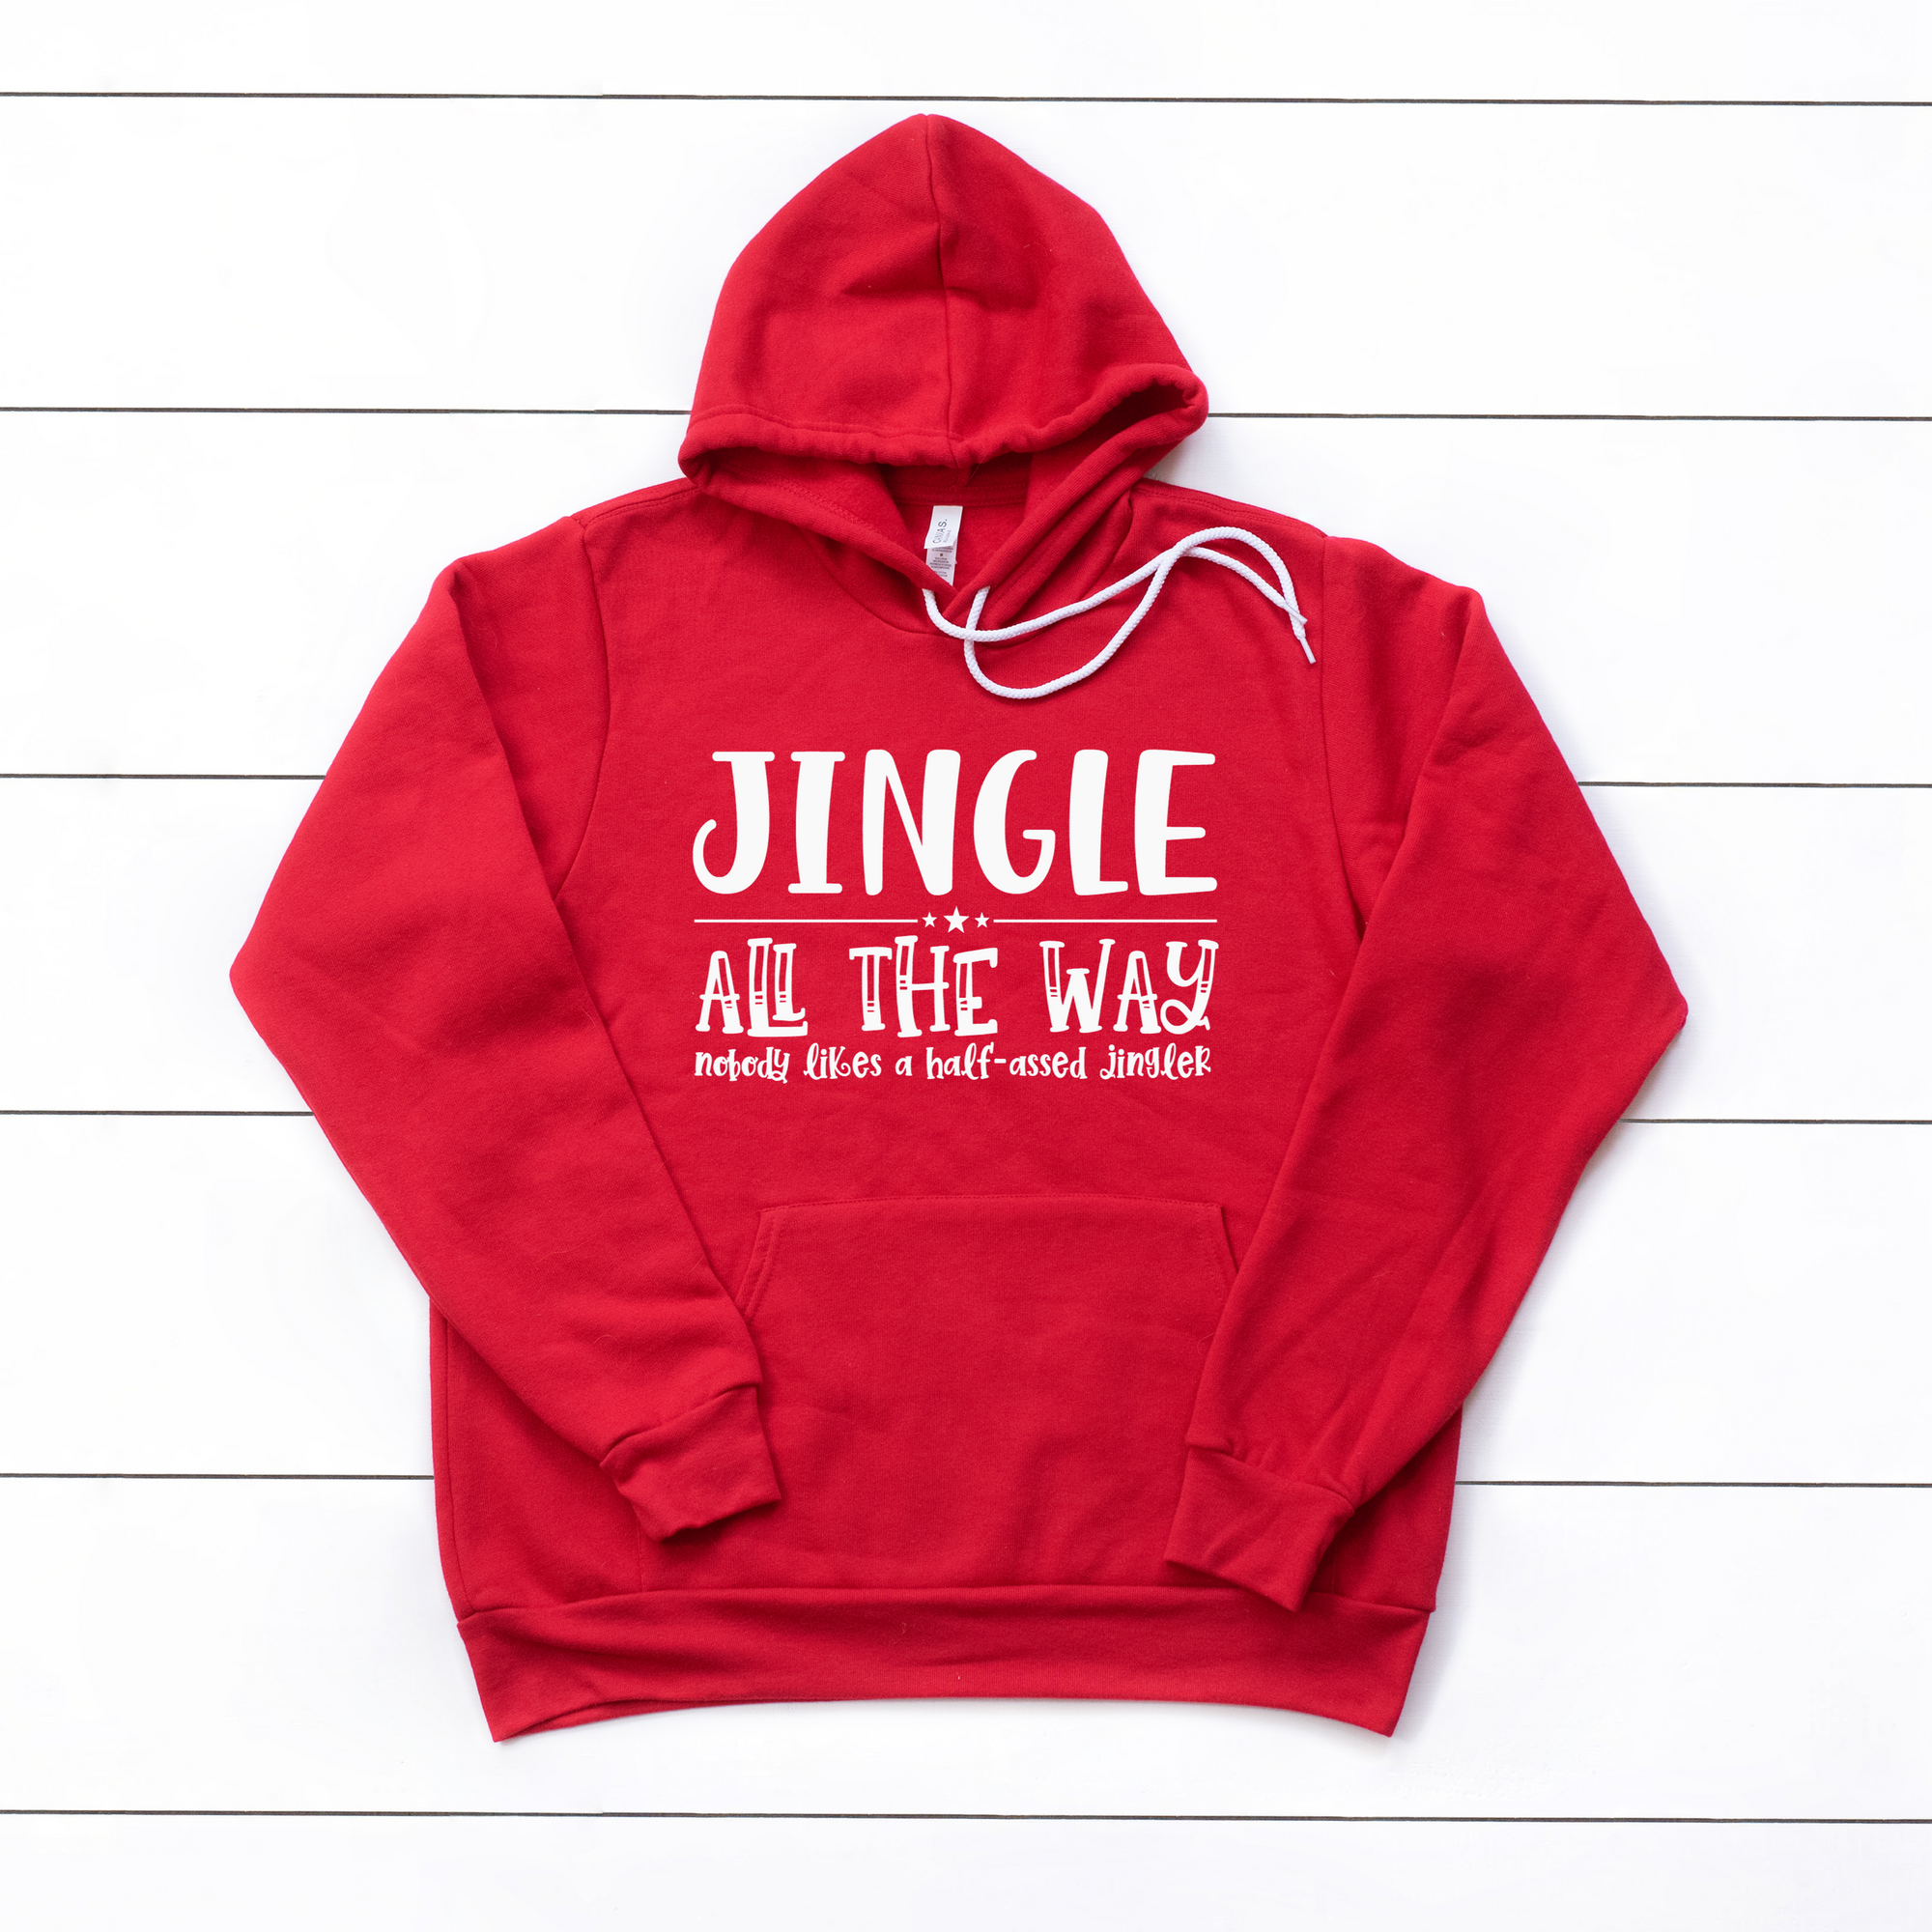 Jingle All the Way Crew or Hoodie Sweatshirt